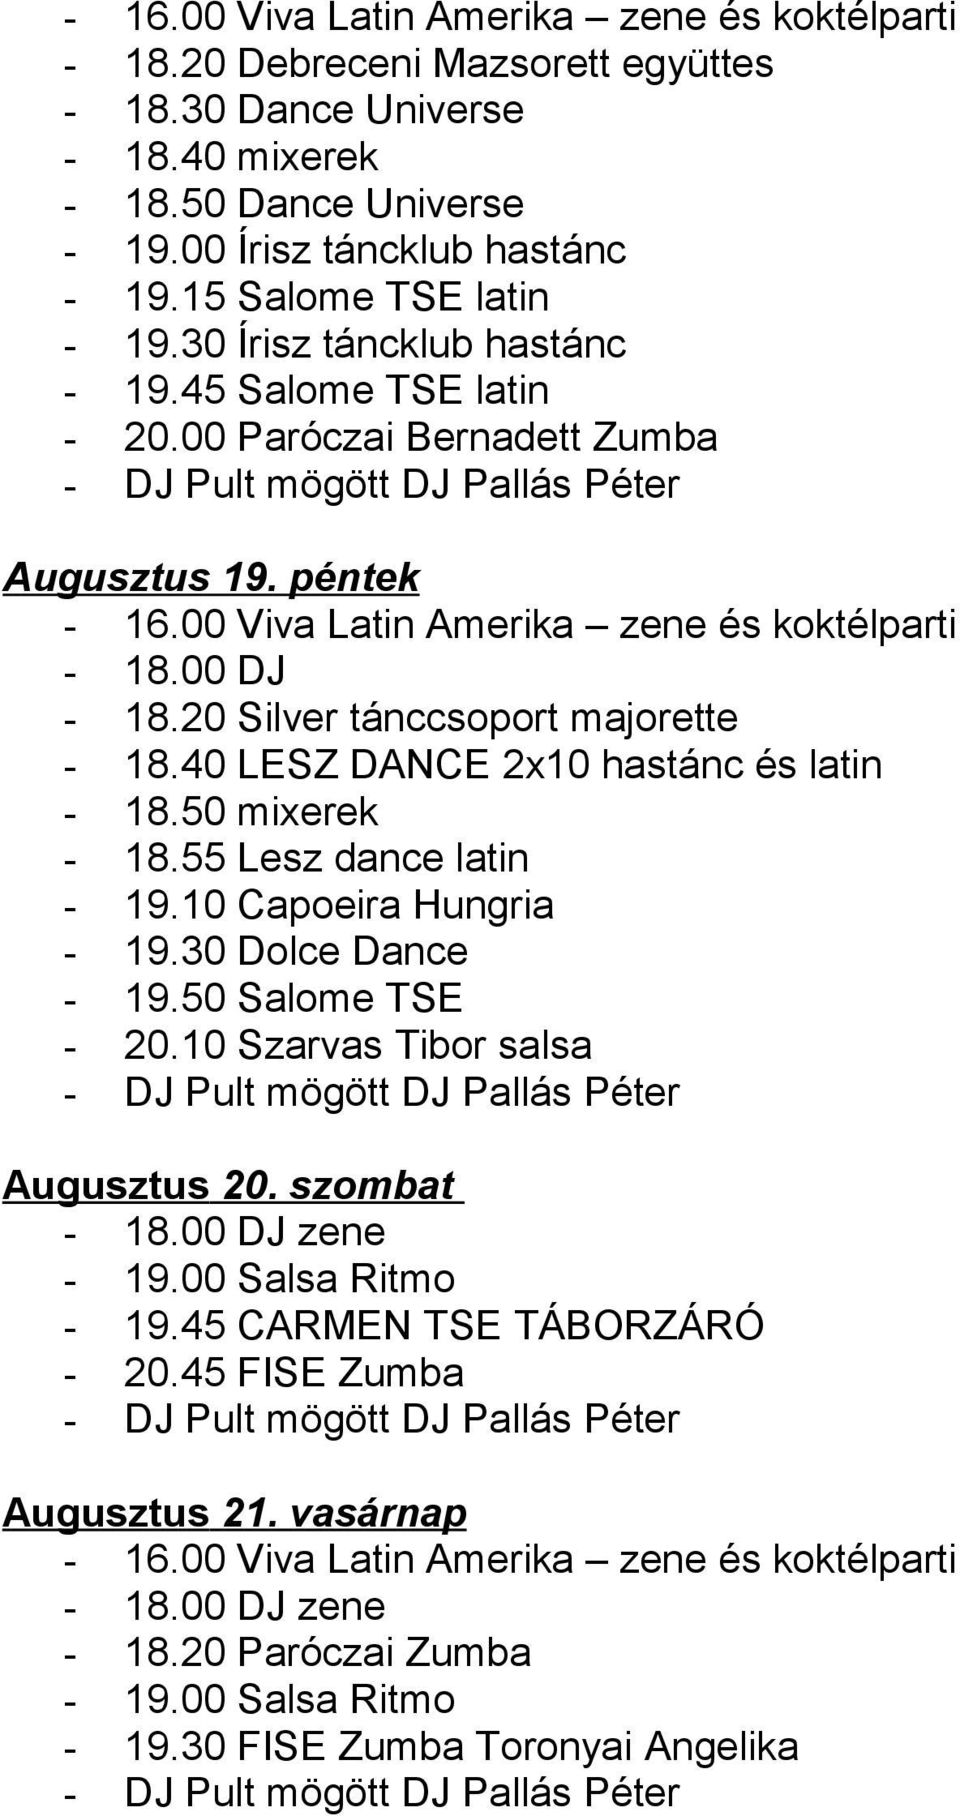 40 LESZ DANCE 2x10 hastánc és latin - 18.55 Lesz dance latin - 19.10 Capoeira Hungria - 19.30 Dolce Dance - 19.50 Salome TSE - 20.